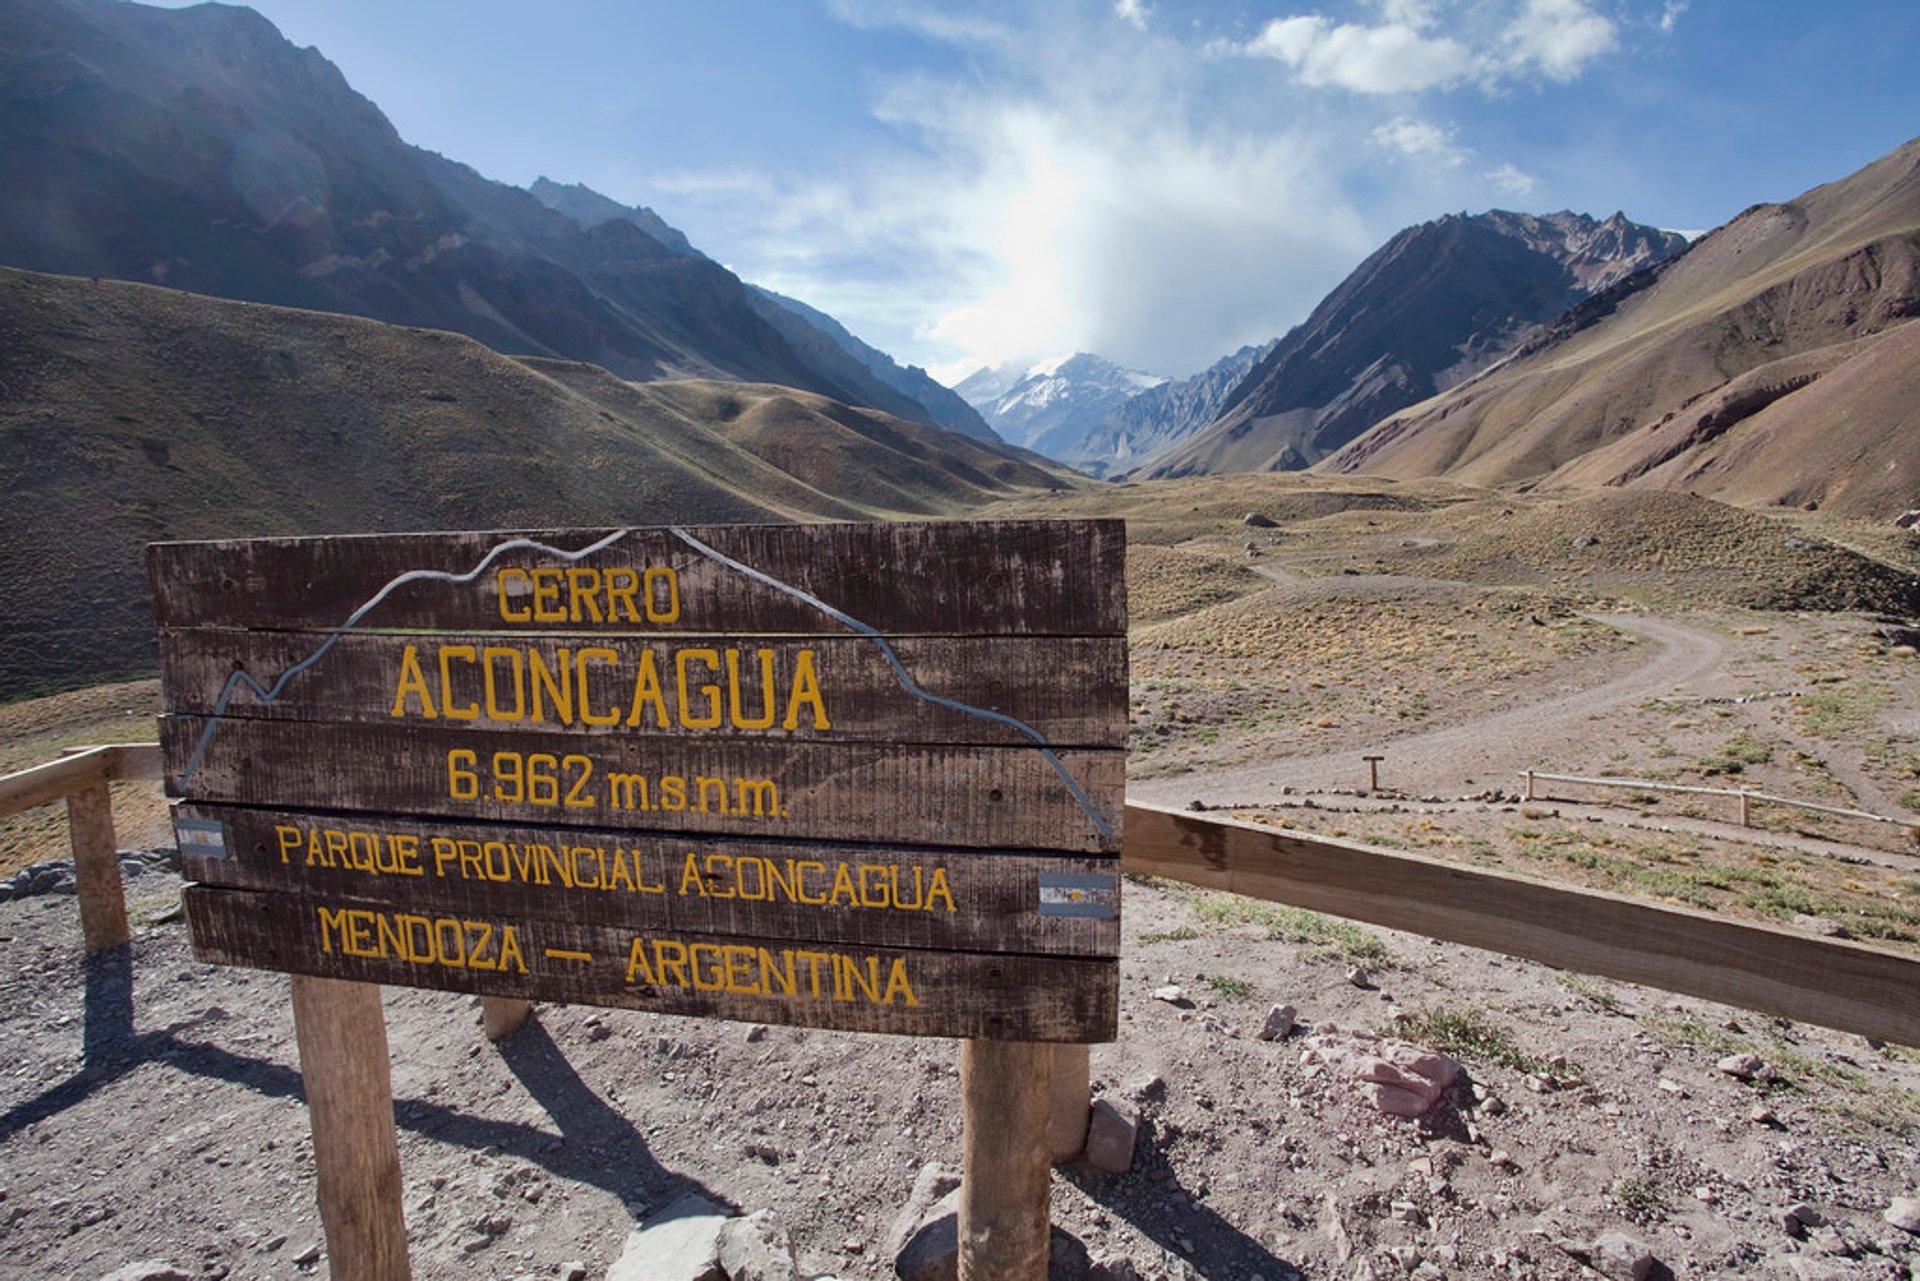 Climbing Mount Aconcagua